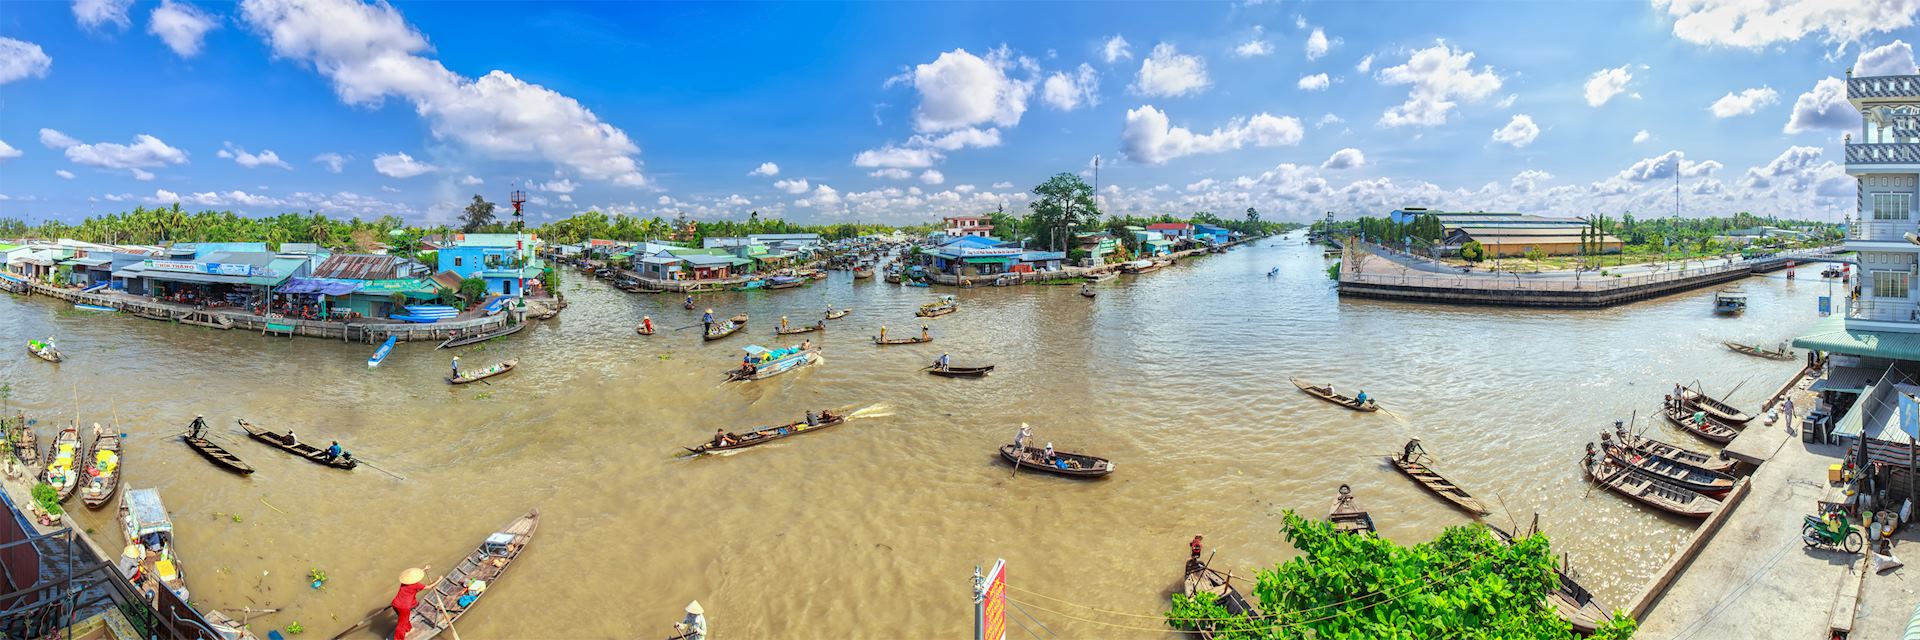 Floating market on the Mekong Delta, Vietnam